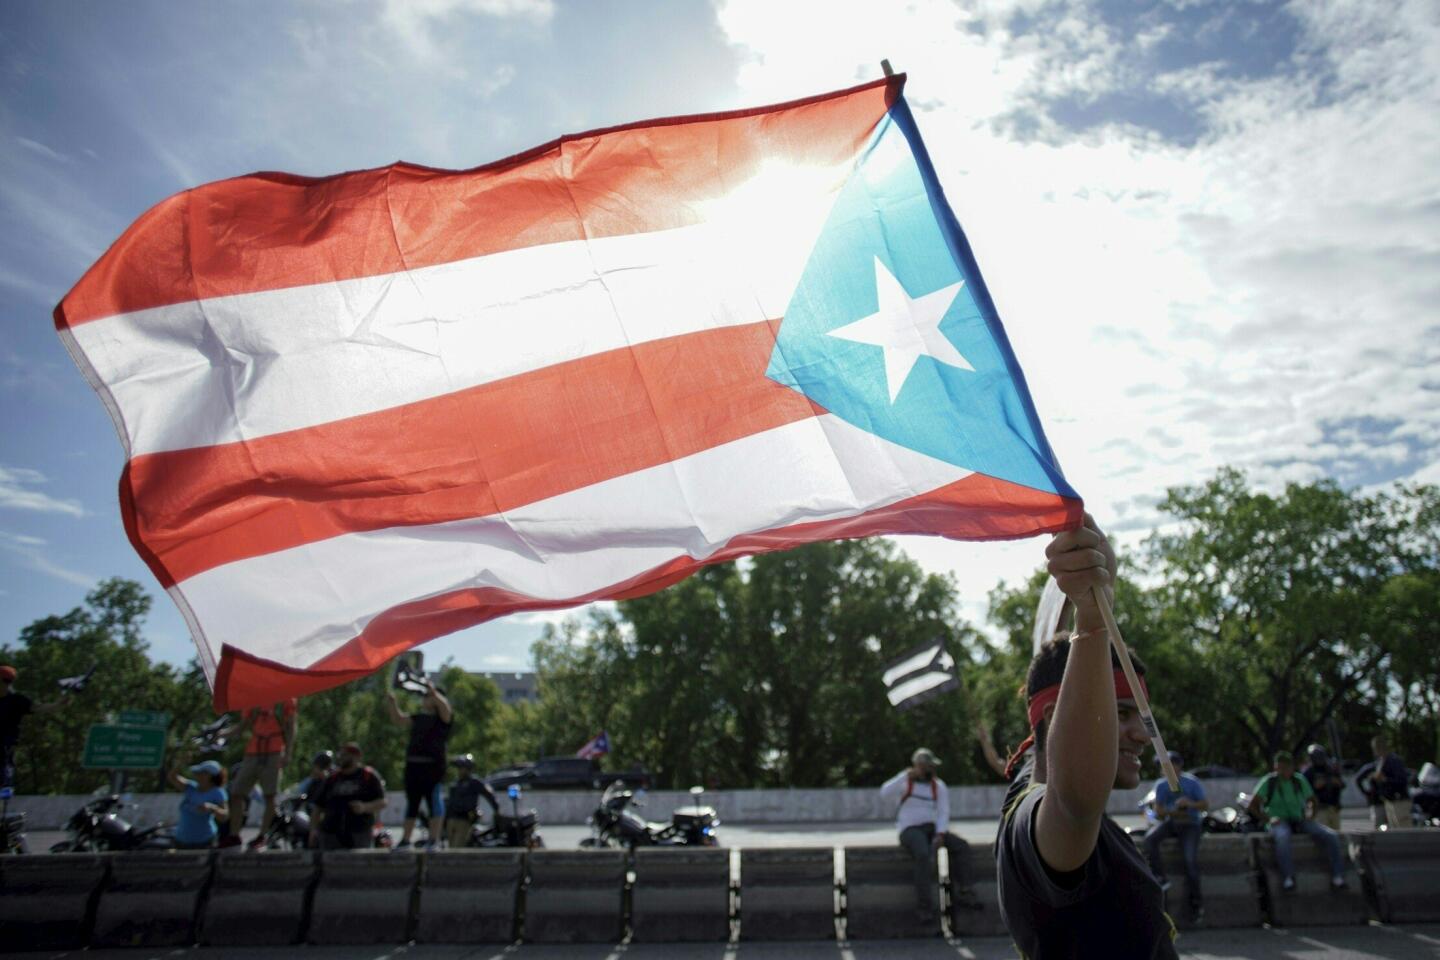 Protest continue in Puerto Rico